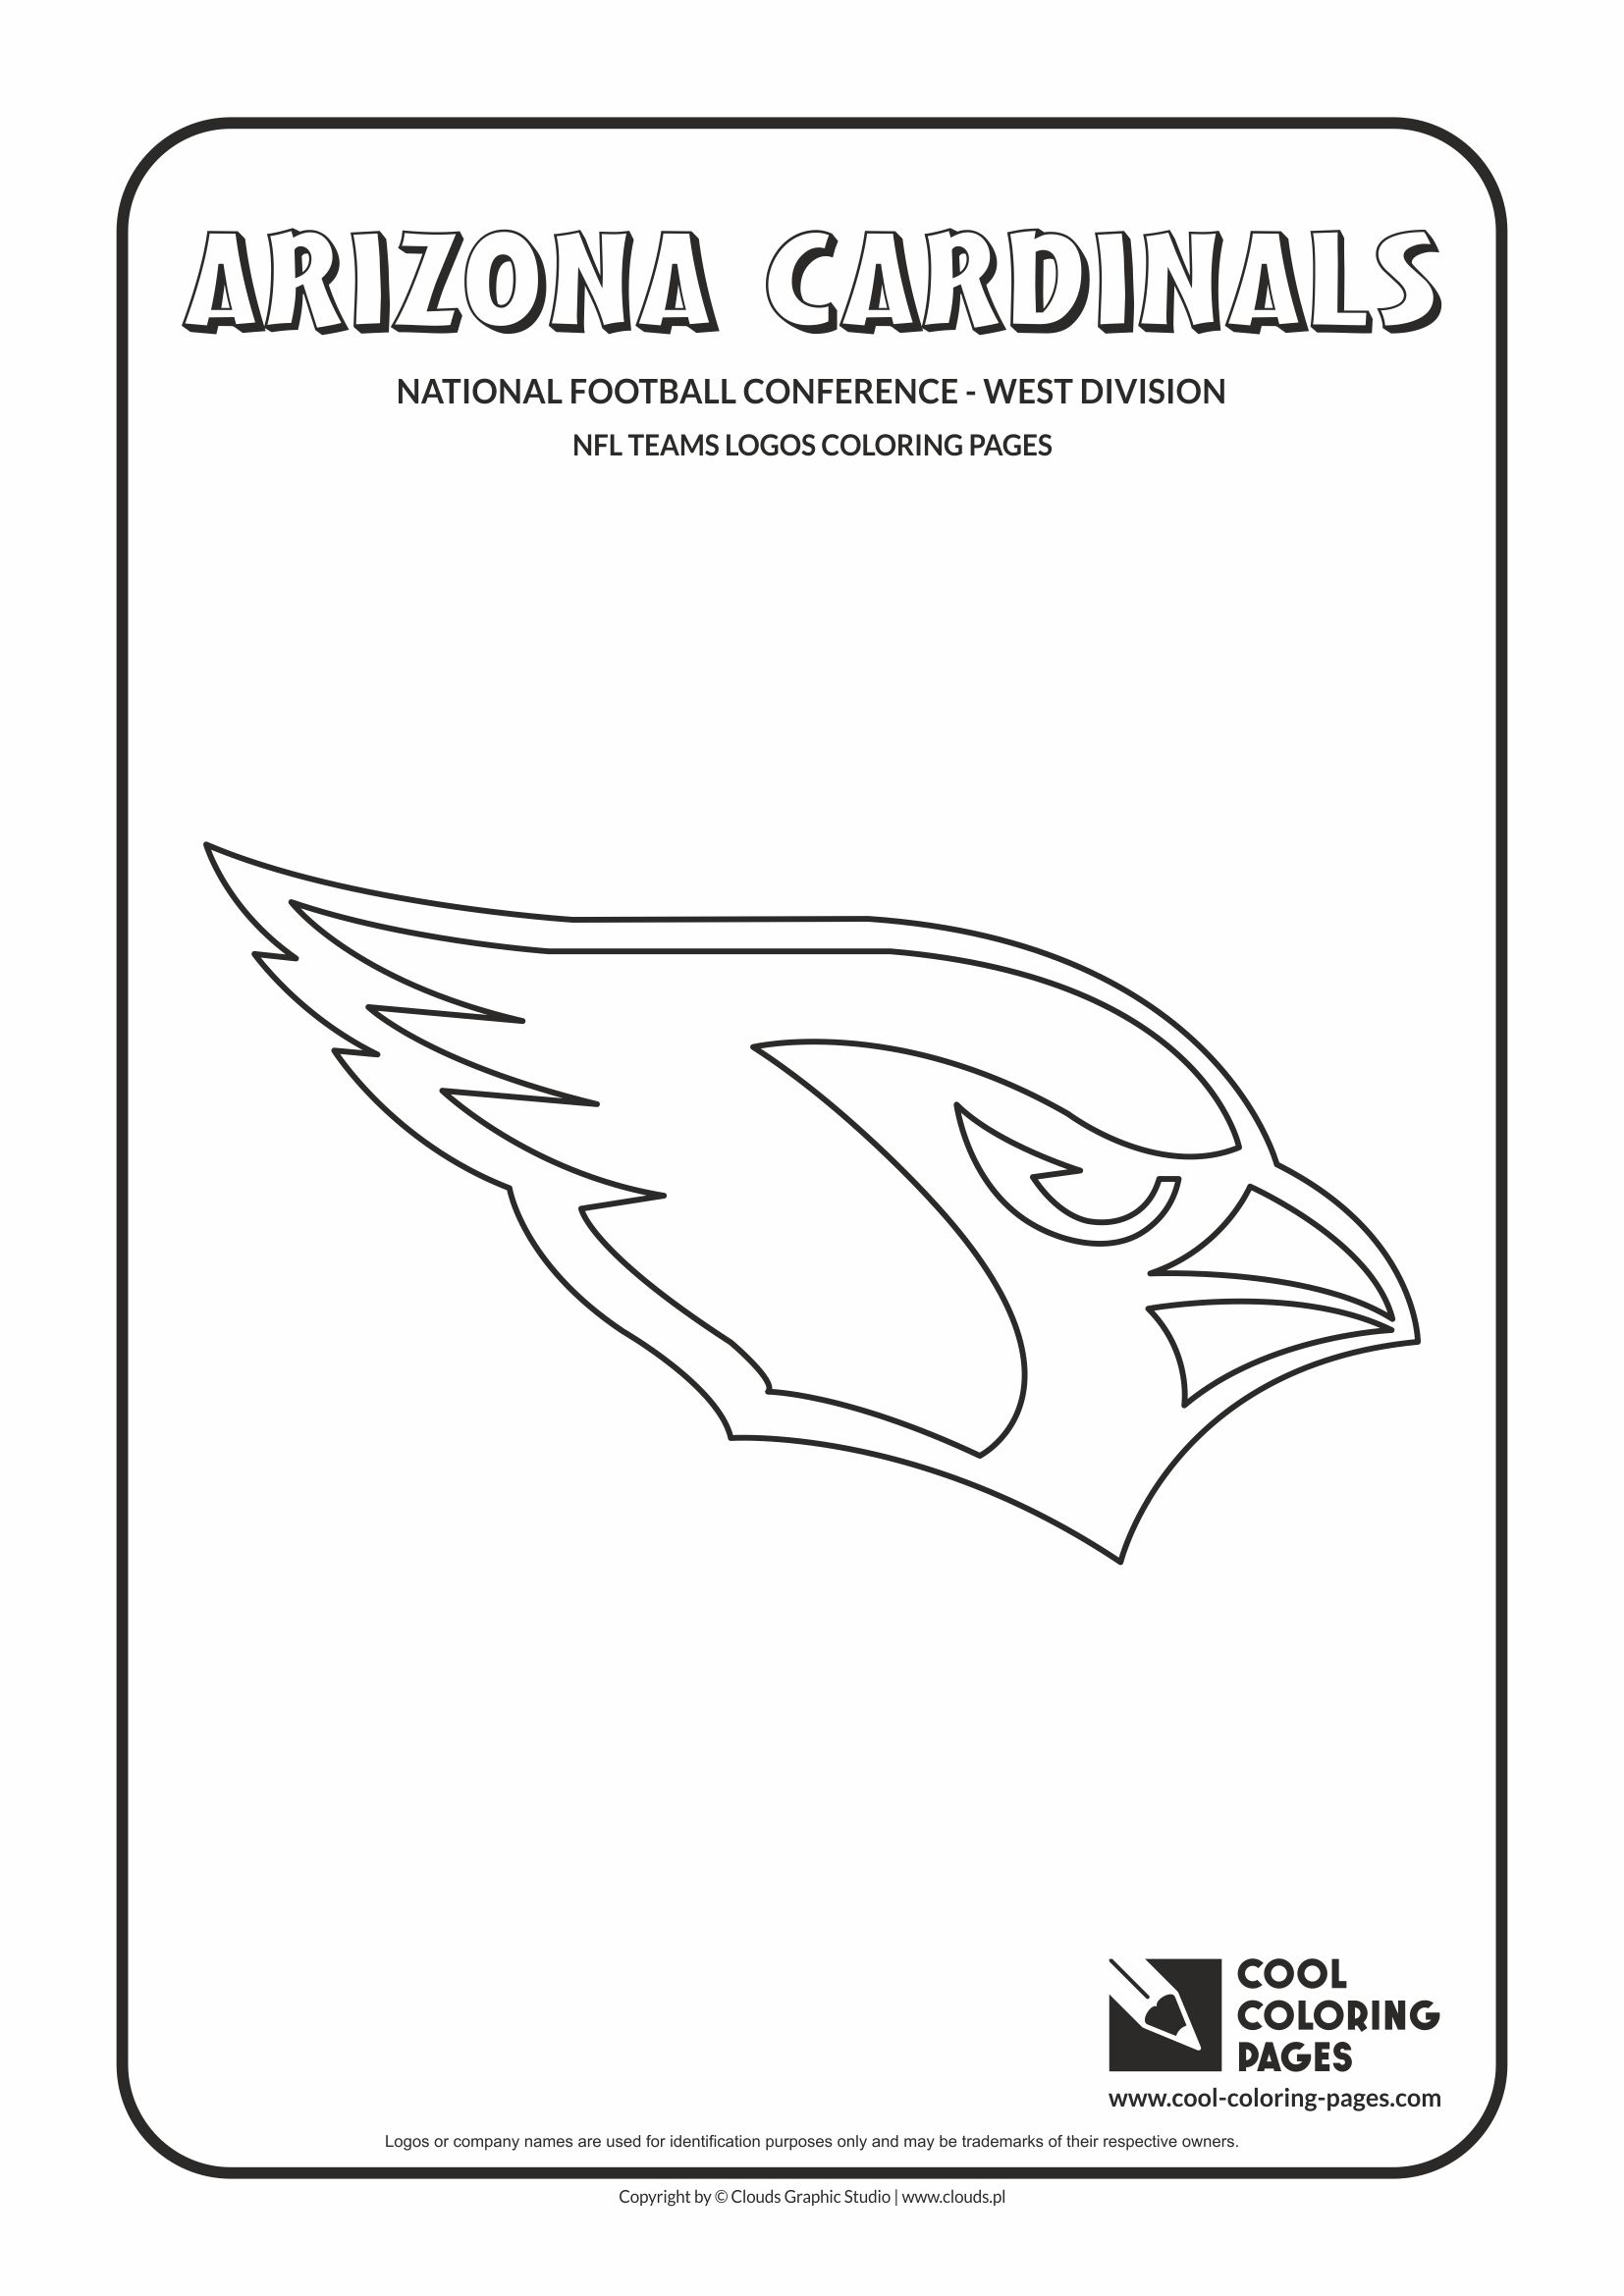 Minnesota Vikings Home Uniform - National Football League (NFL) - Chris  Creamer's Sports Logos Page 